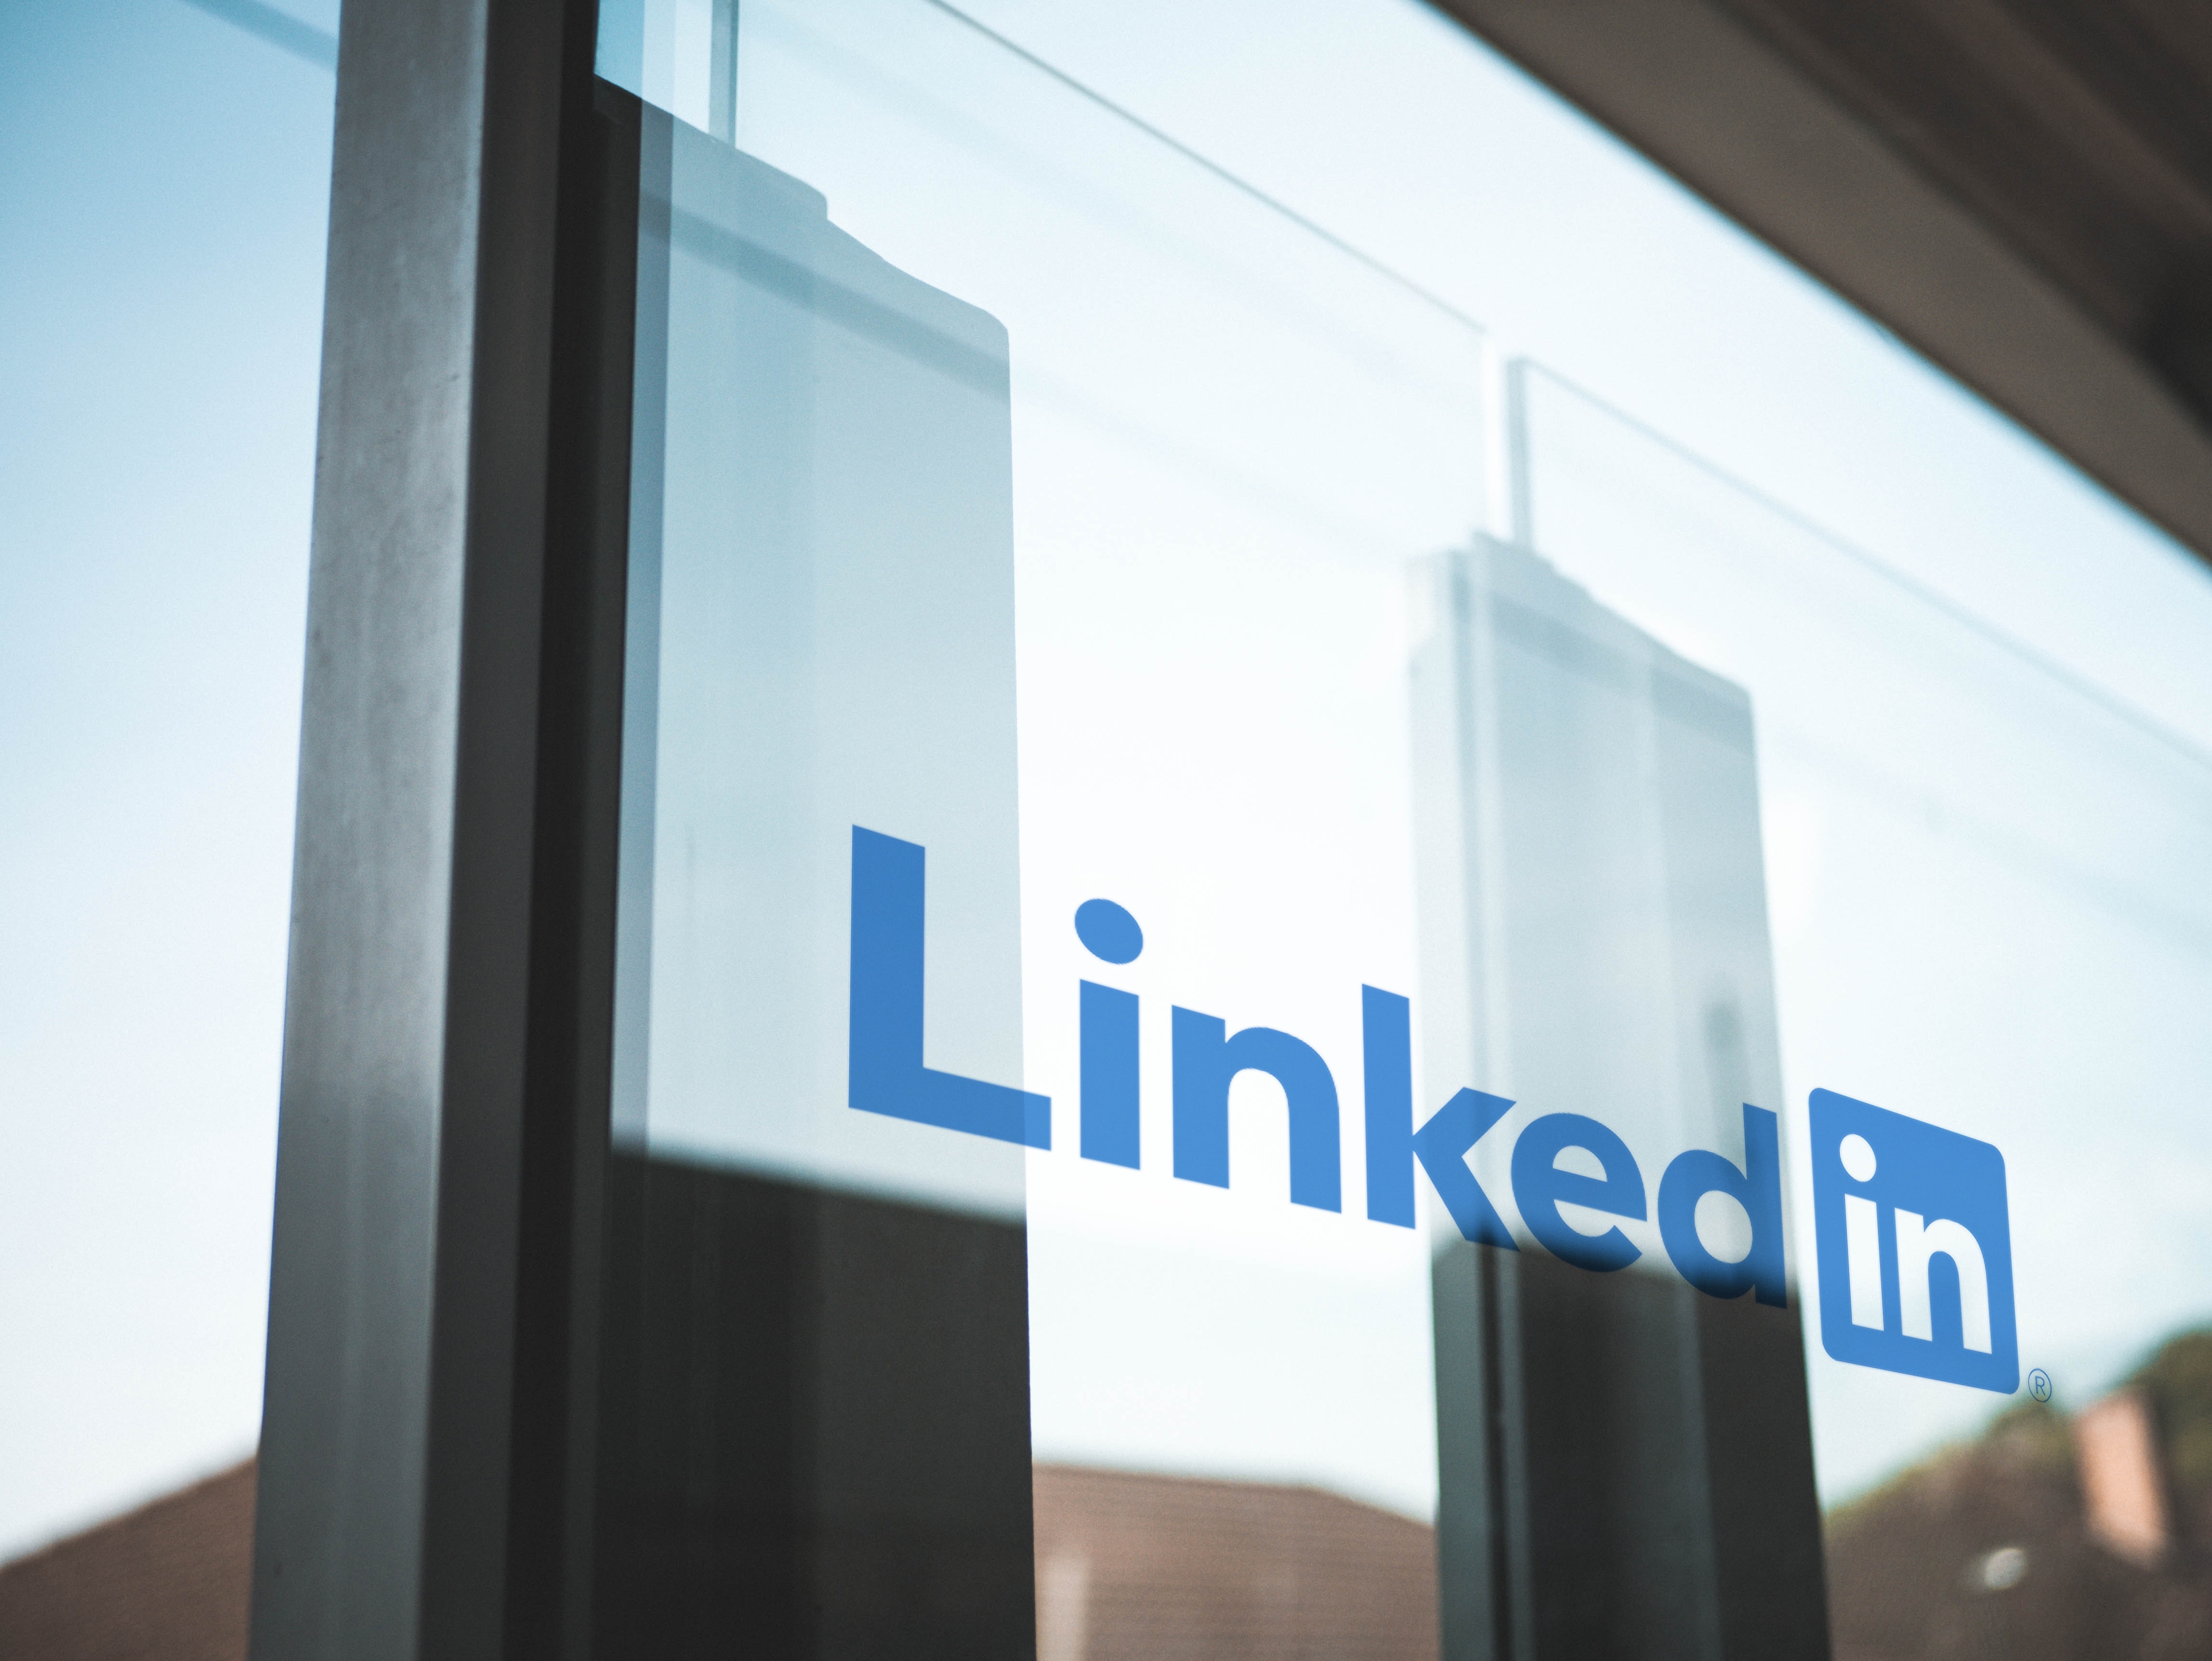 LinkedIn logo on a glass panel against a scyscraper background